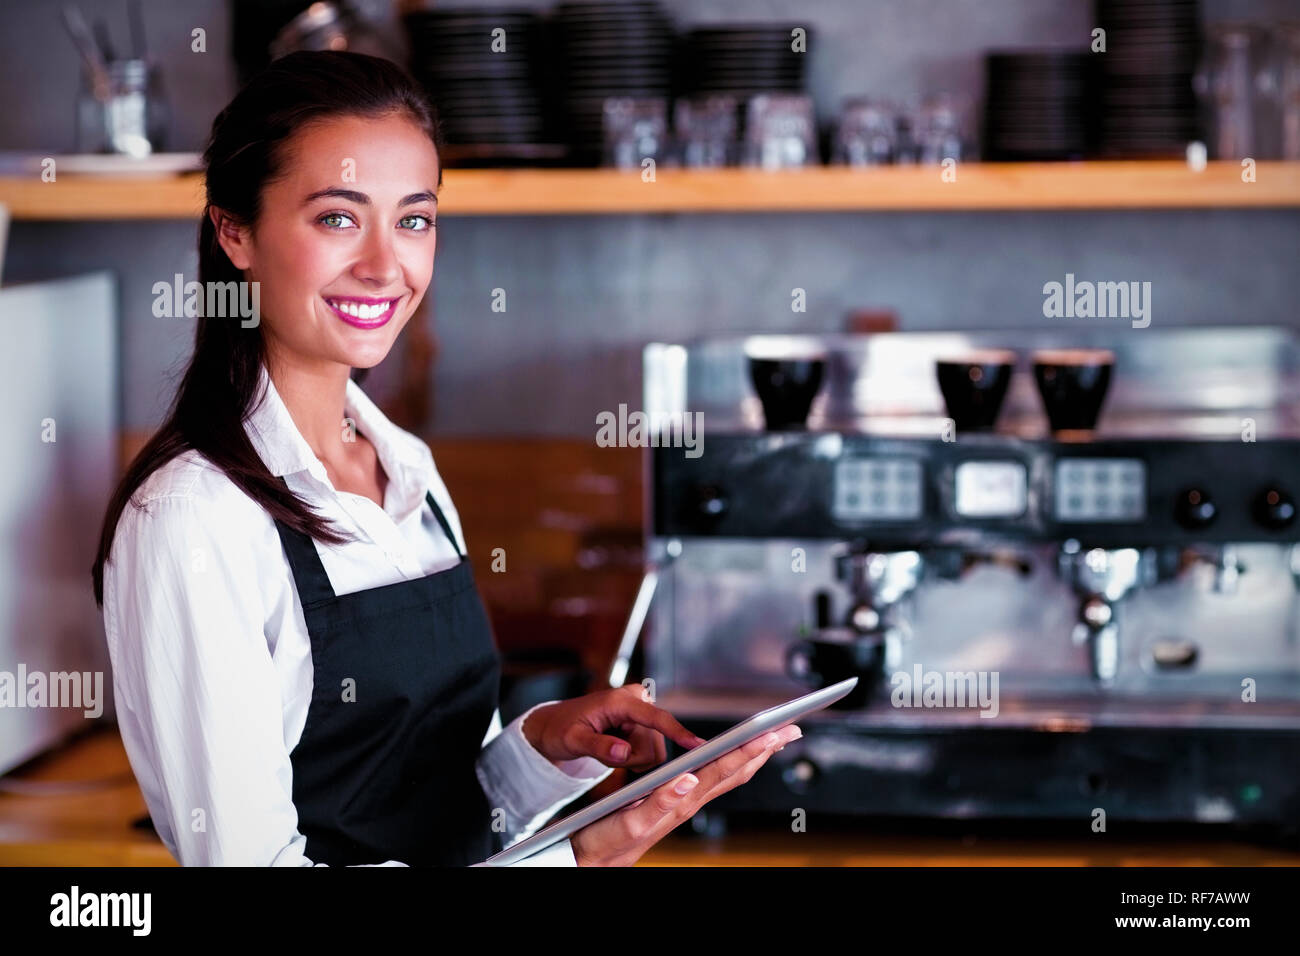 Portrait of smiling waitress using digital tablet Stock Photo